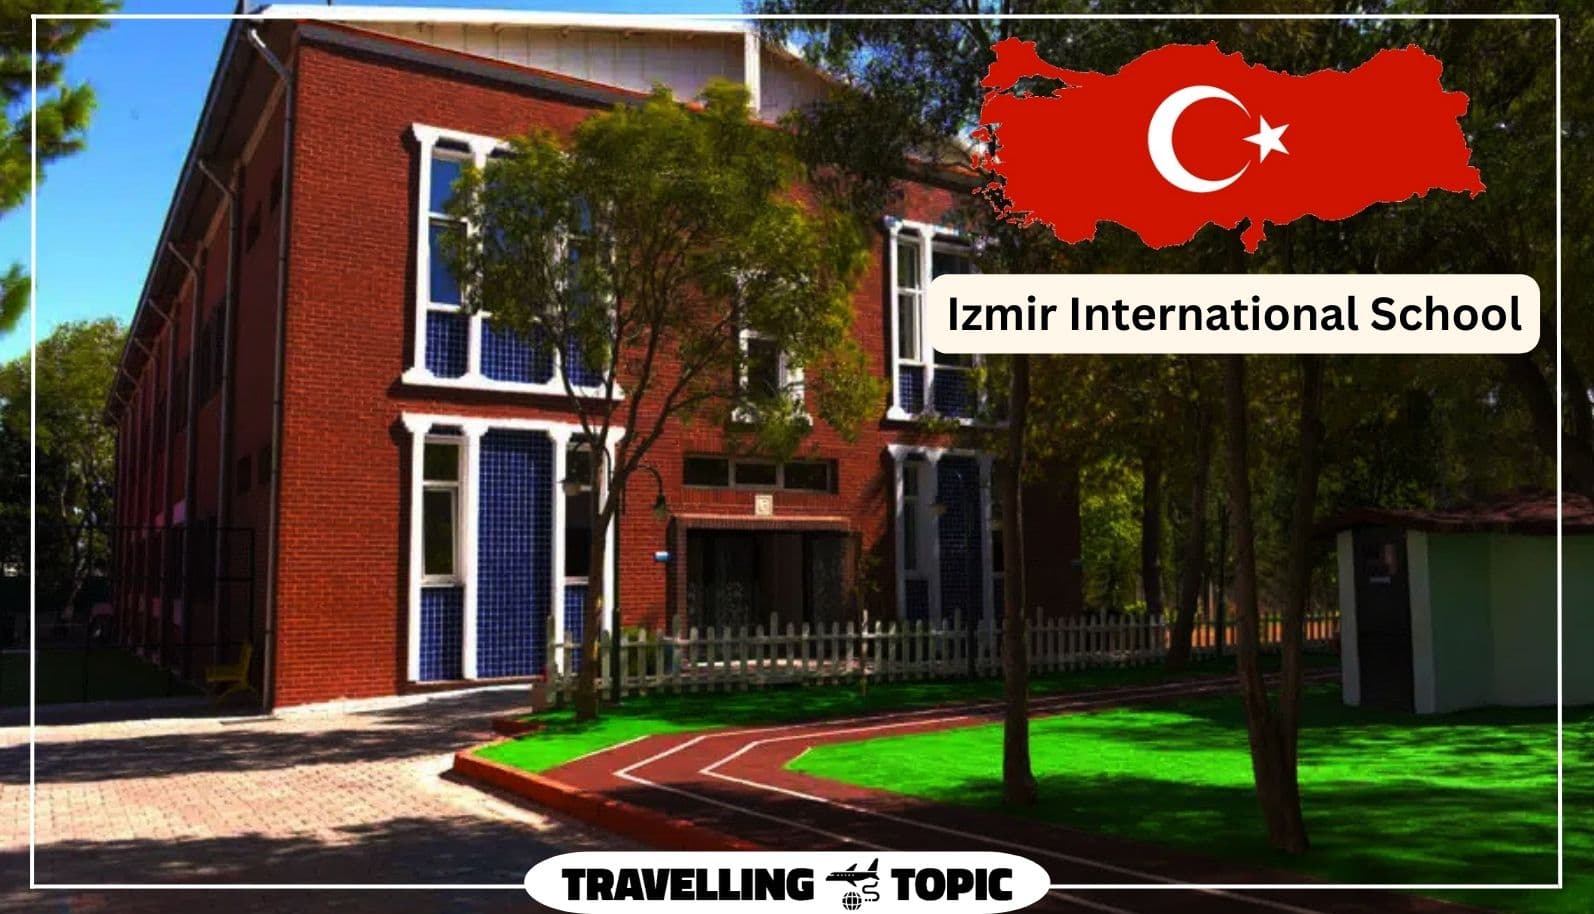 Izmir International School